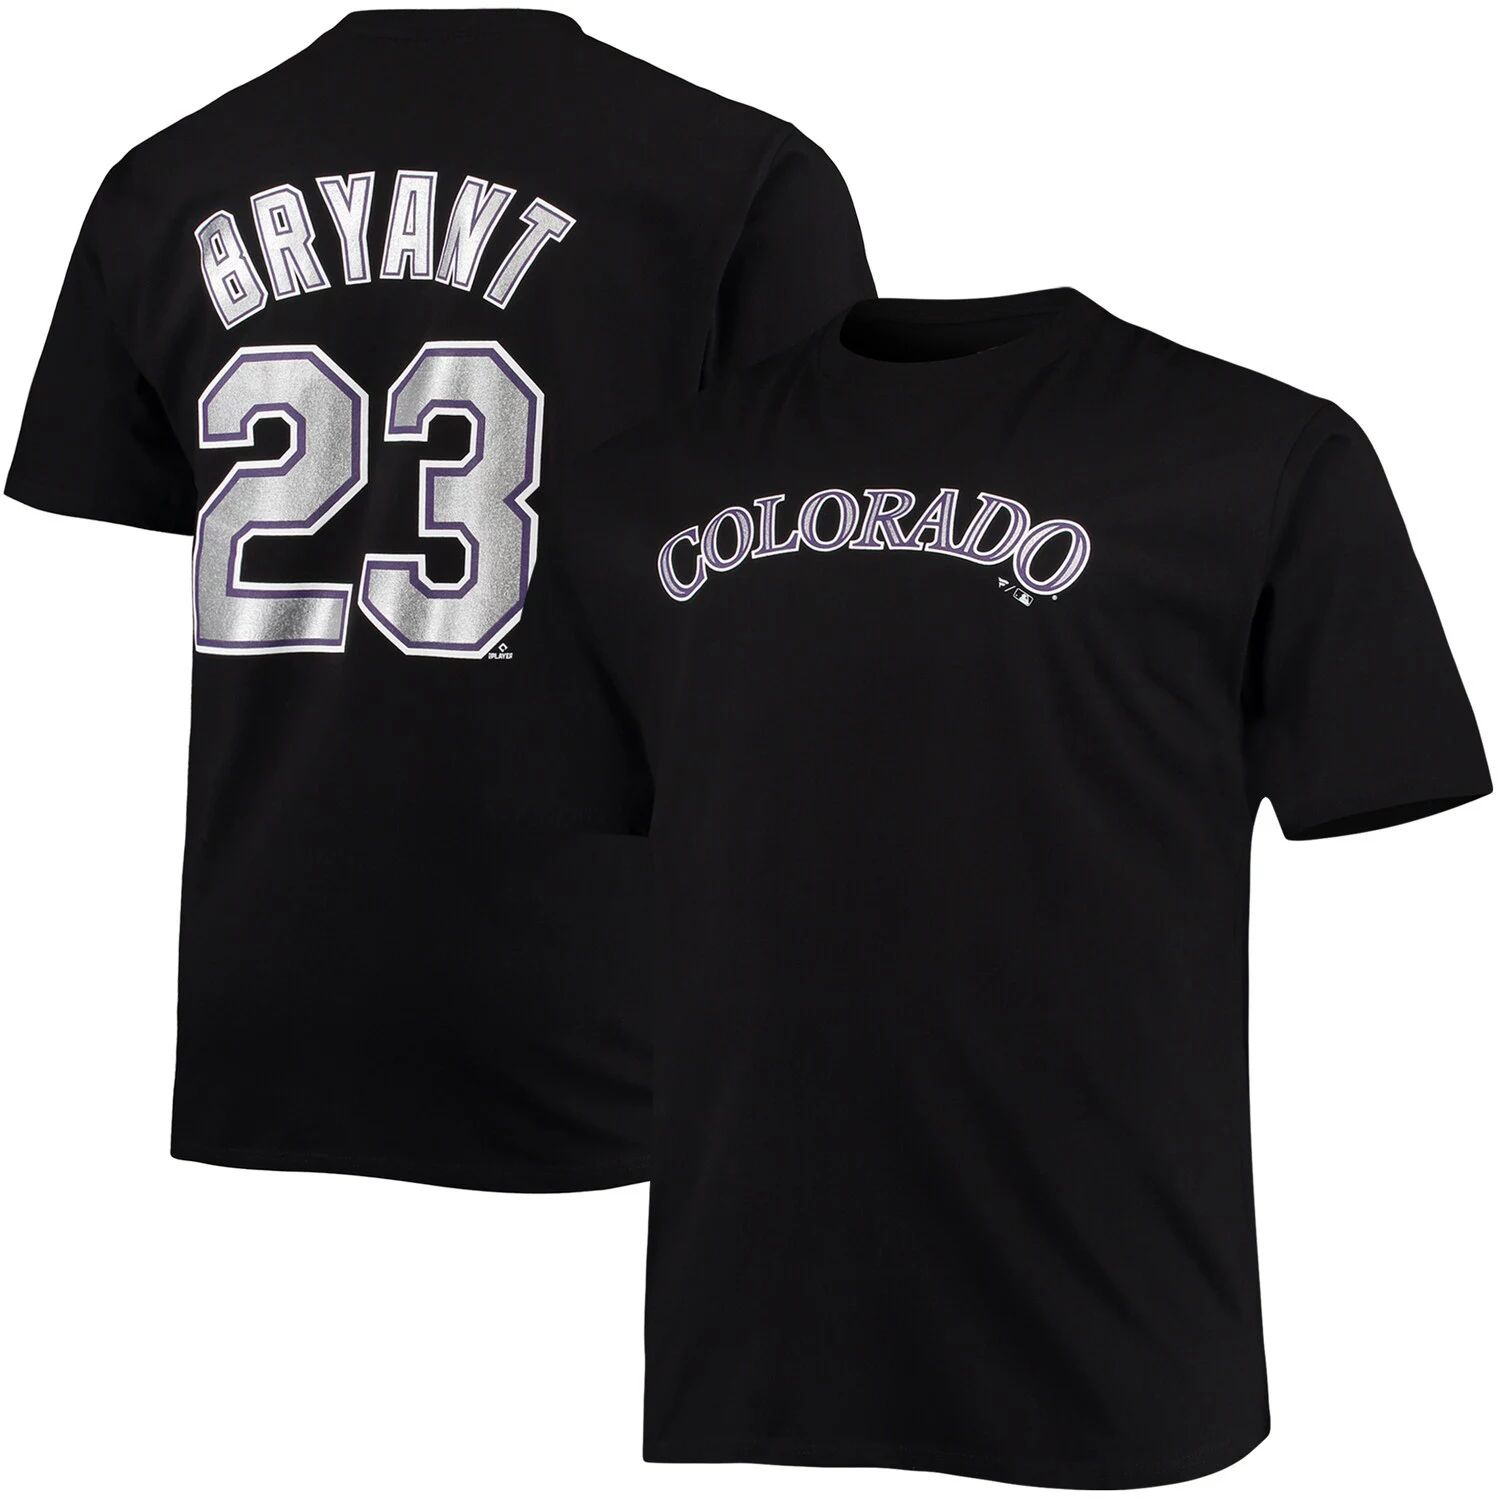 Мужская футболка Kris Bryant Black Colorado Rockies Big & Tall с именем и номером мужская футболка kris bryant purple colorado rockies с именем и номером игрока nike фиолетовый